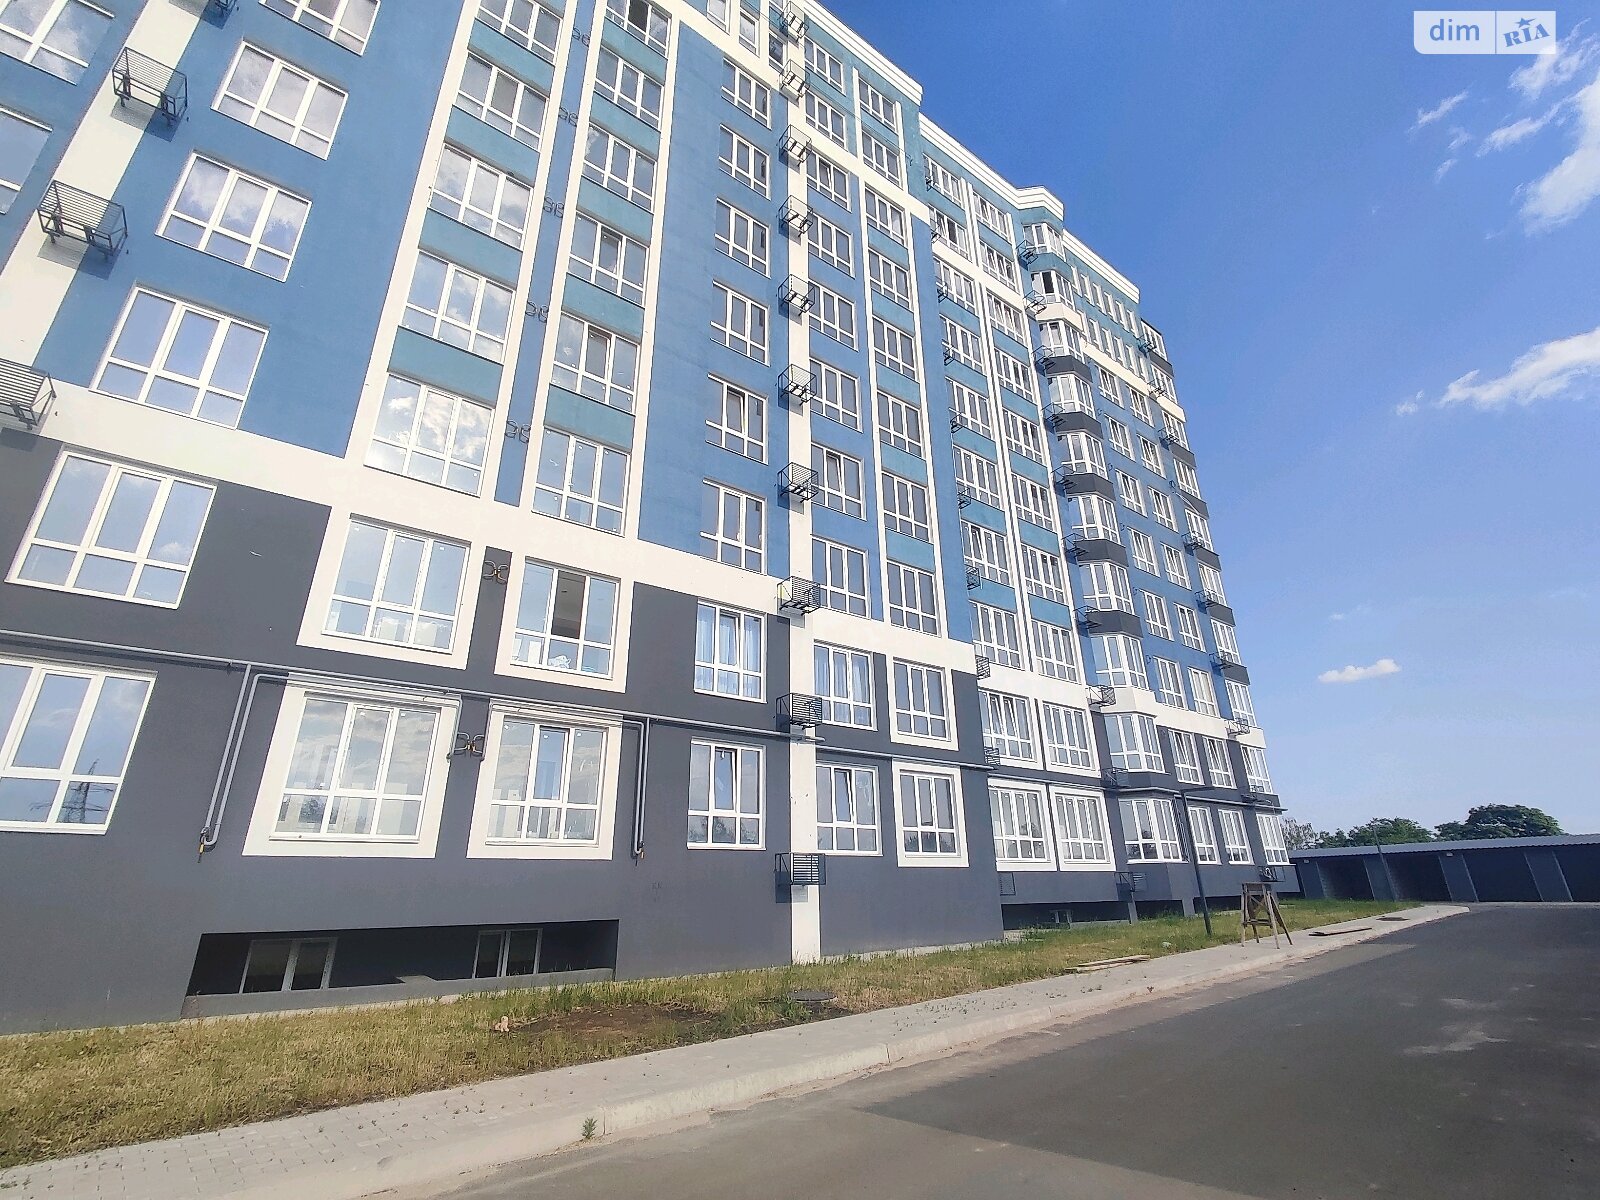 Продажа однокомнатной квартиры в Чернигове, на ул. Лесная 42, район Яловщина фото 1